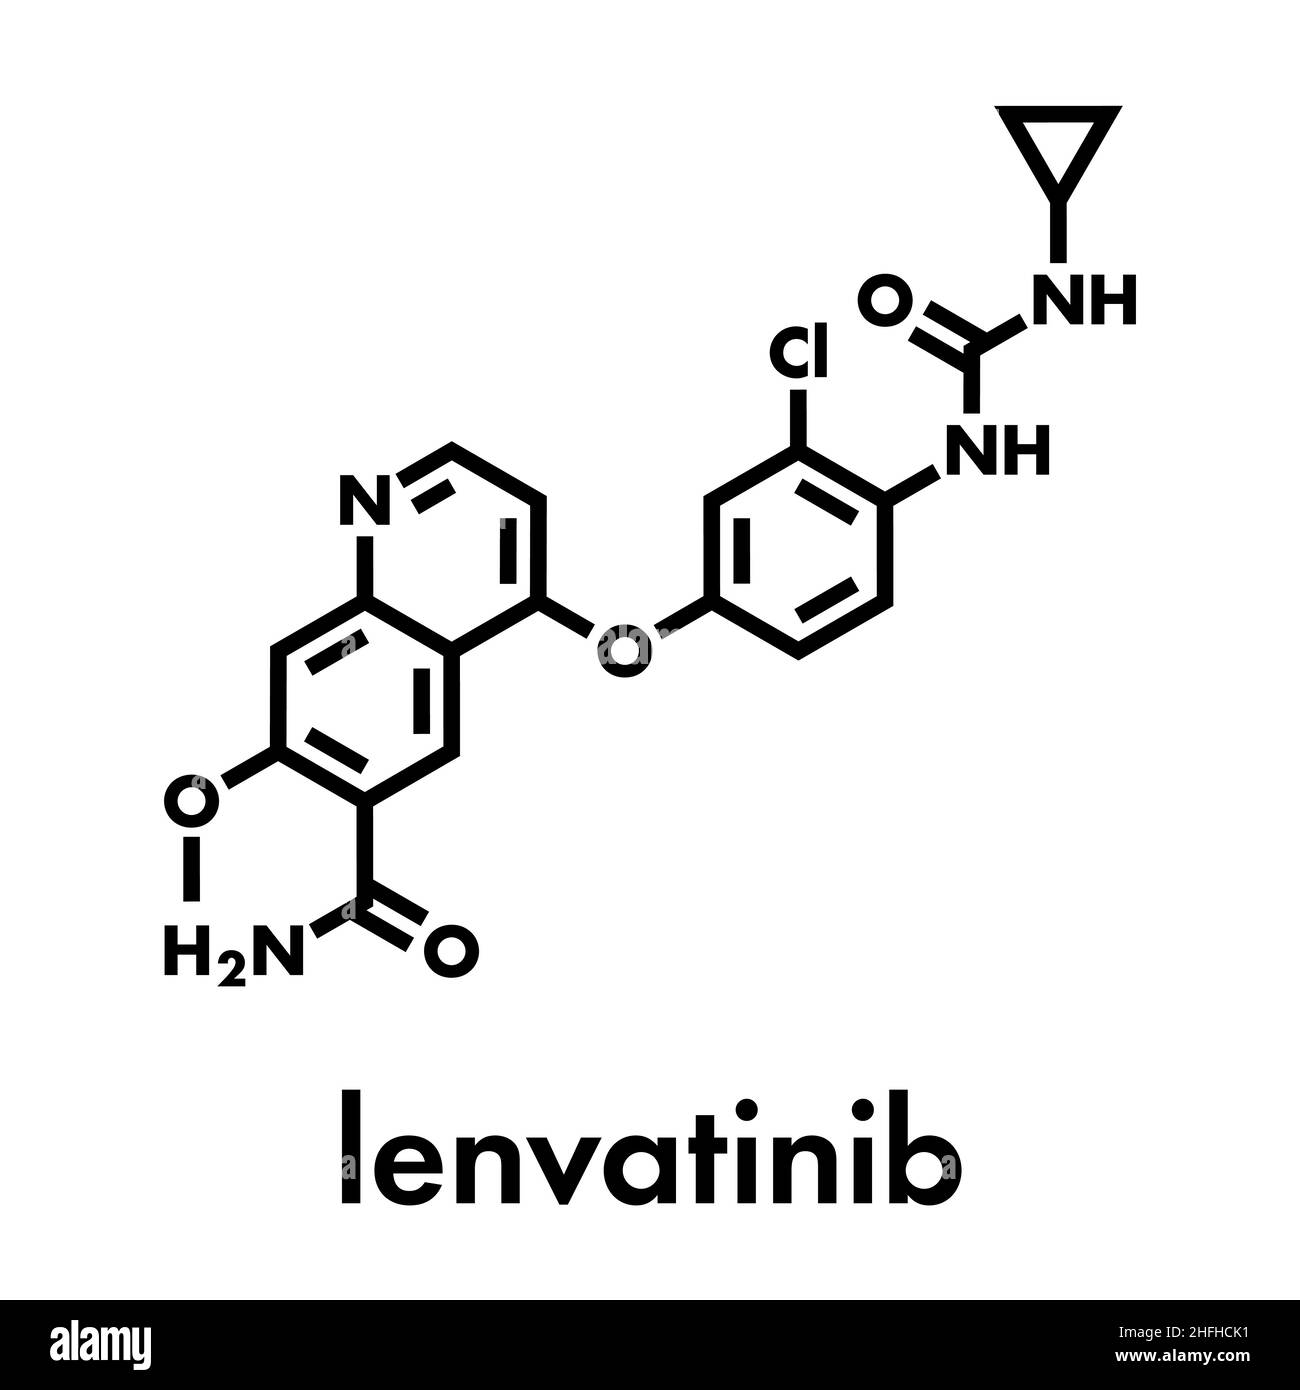 Lenvatinib cancer drug molecule (multi-kinase inhibitor). Skeletal formula. Stock Vector